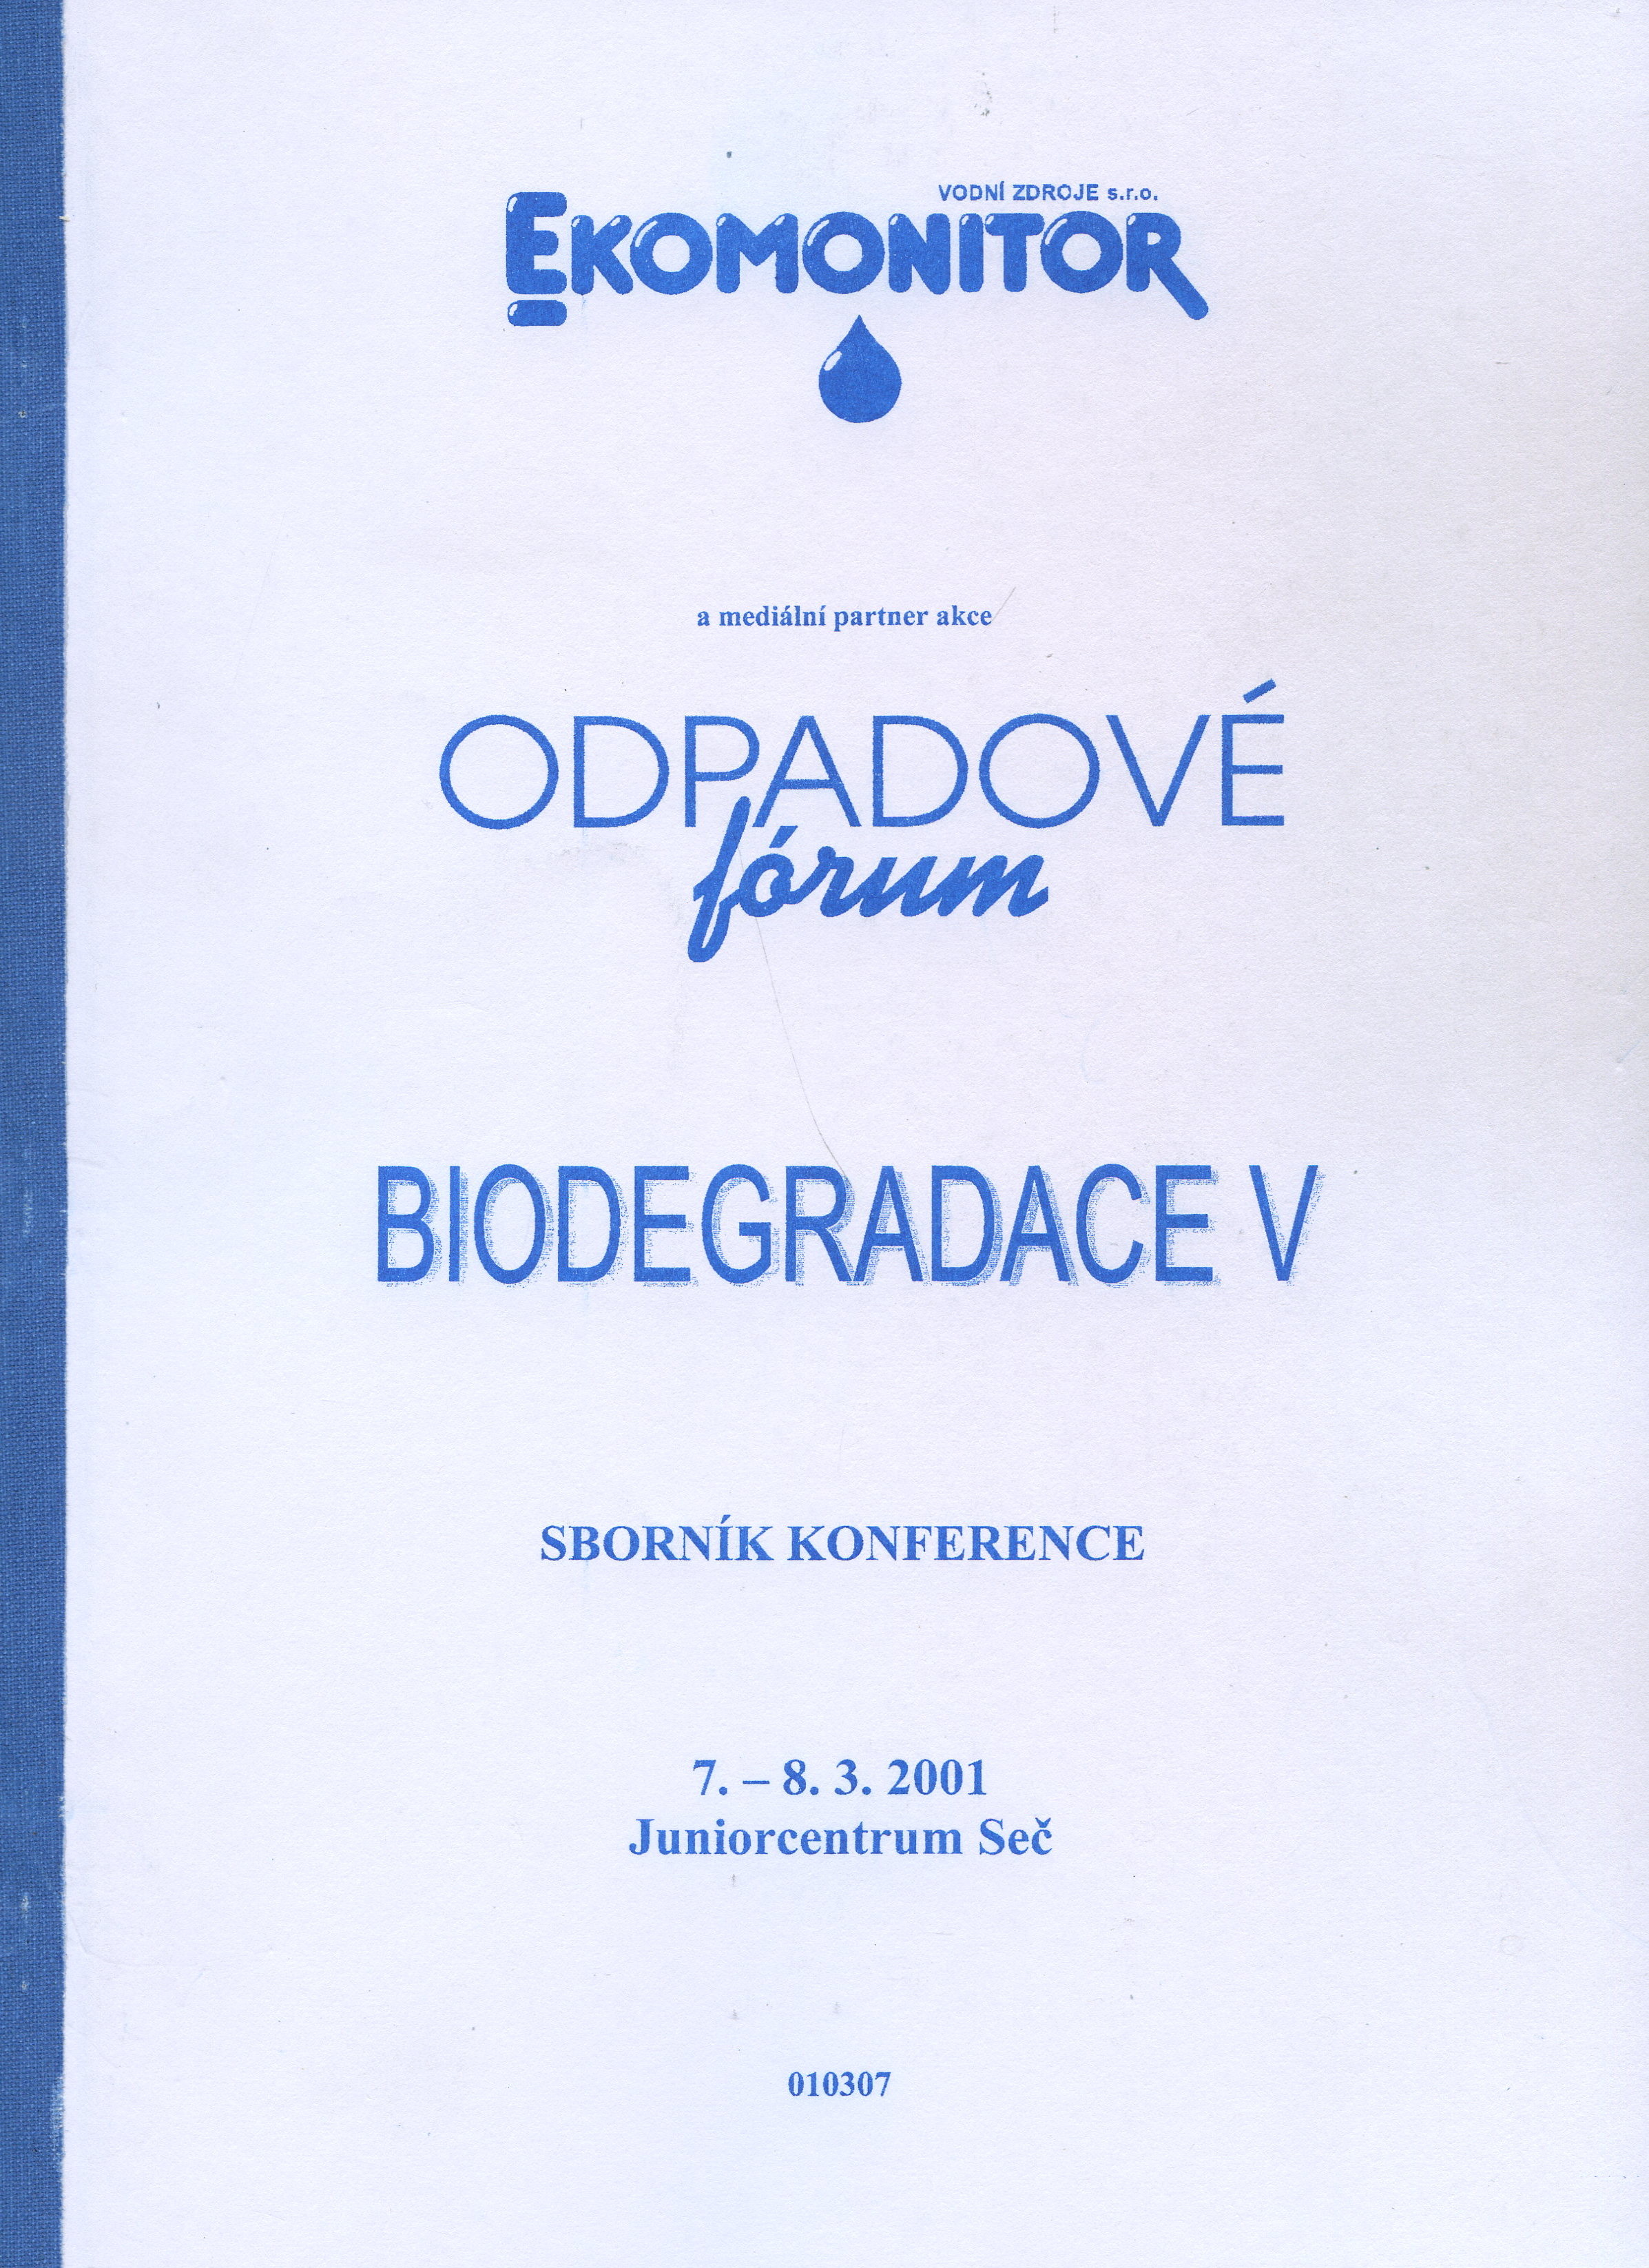 Biodegradace V